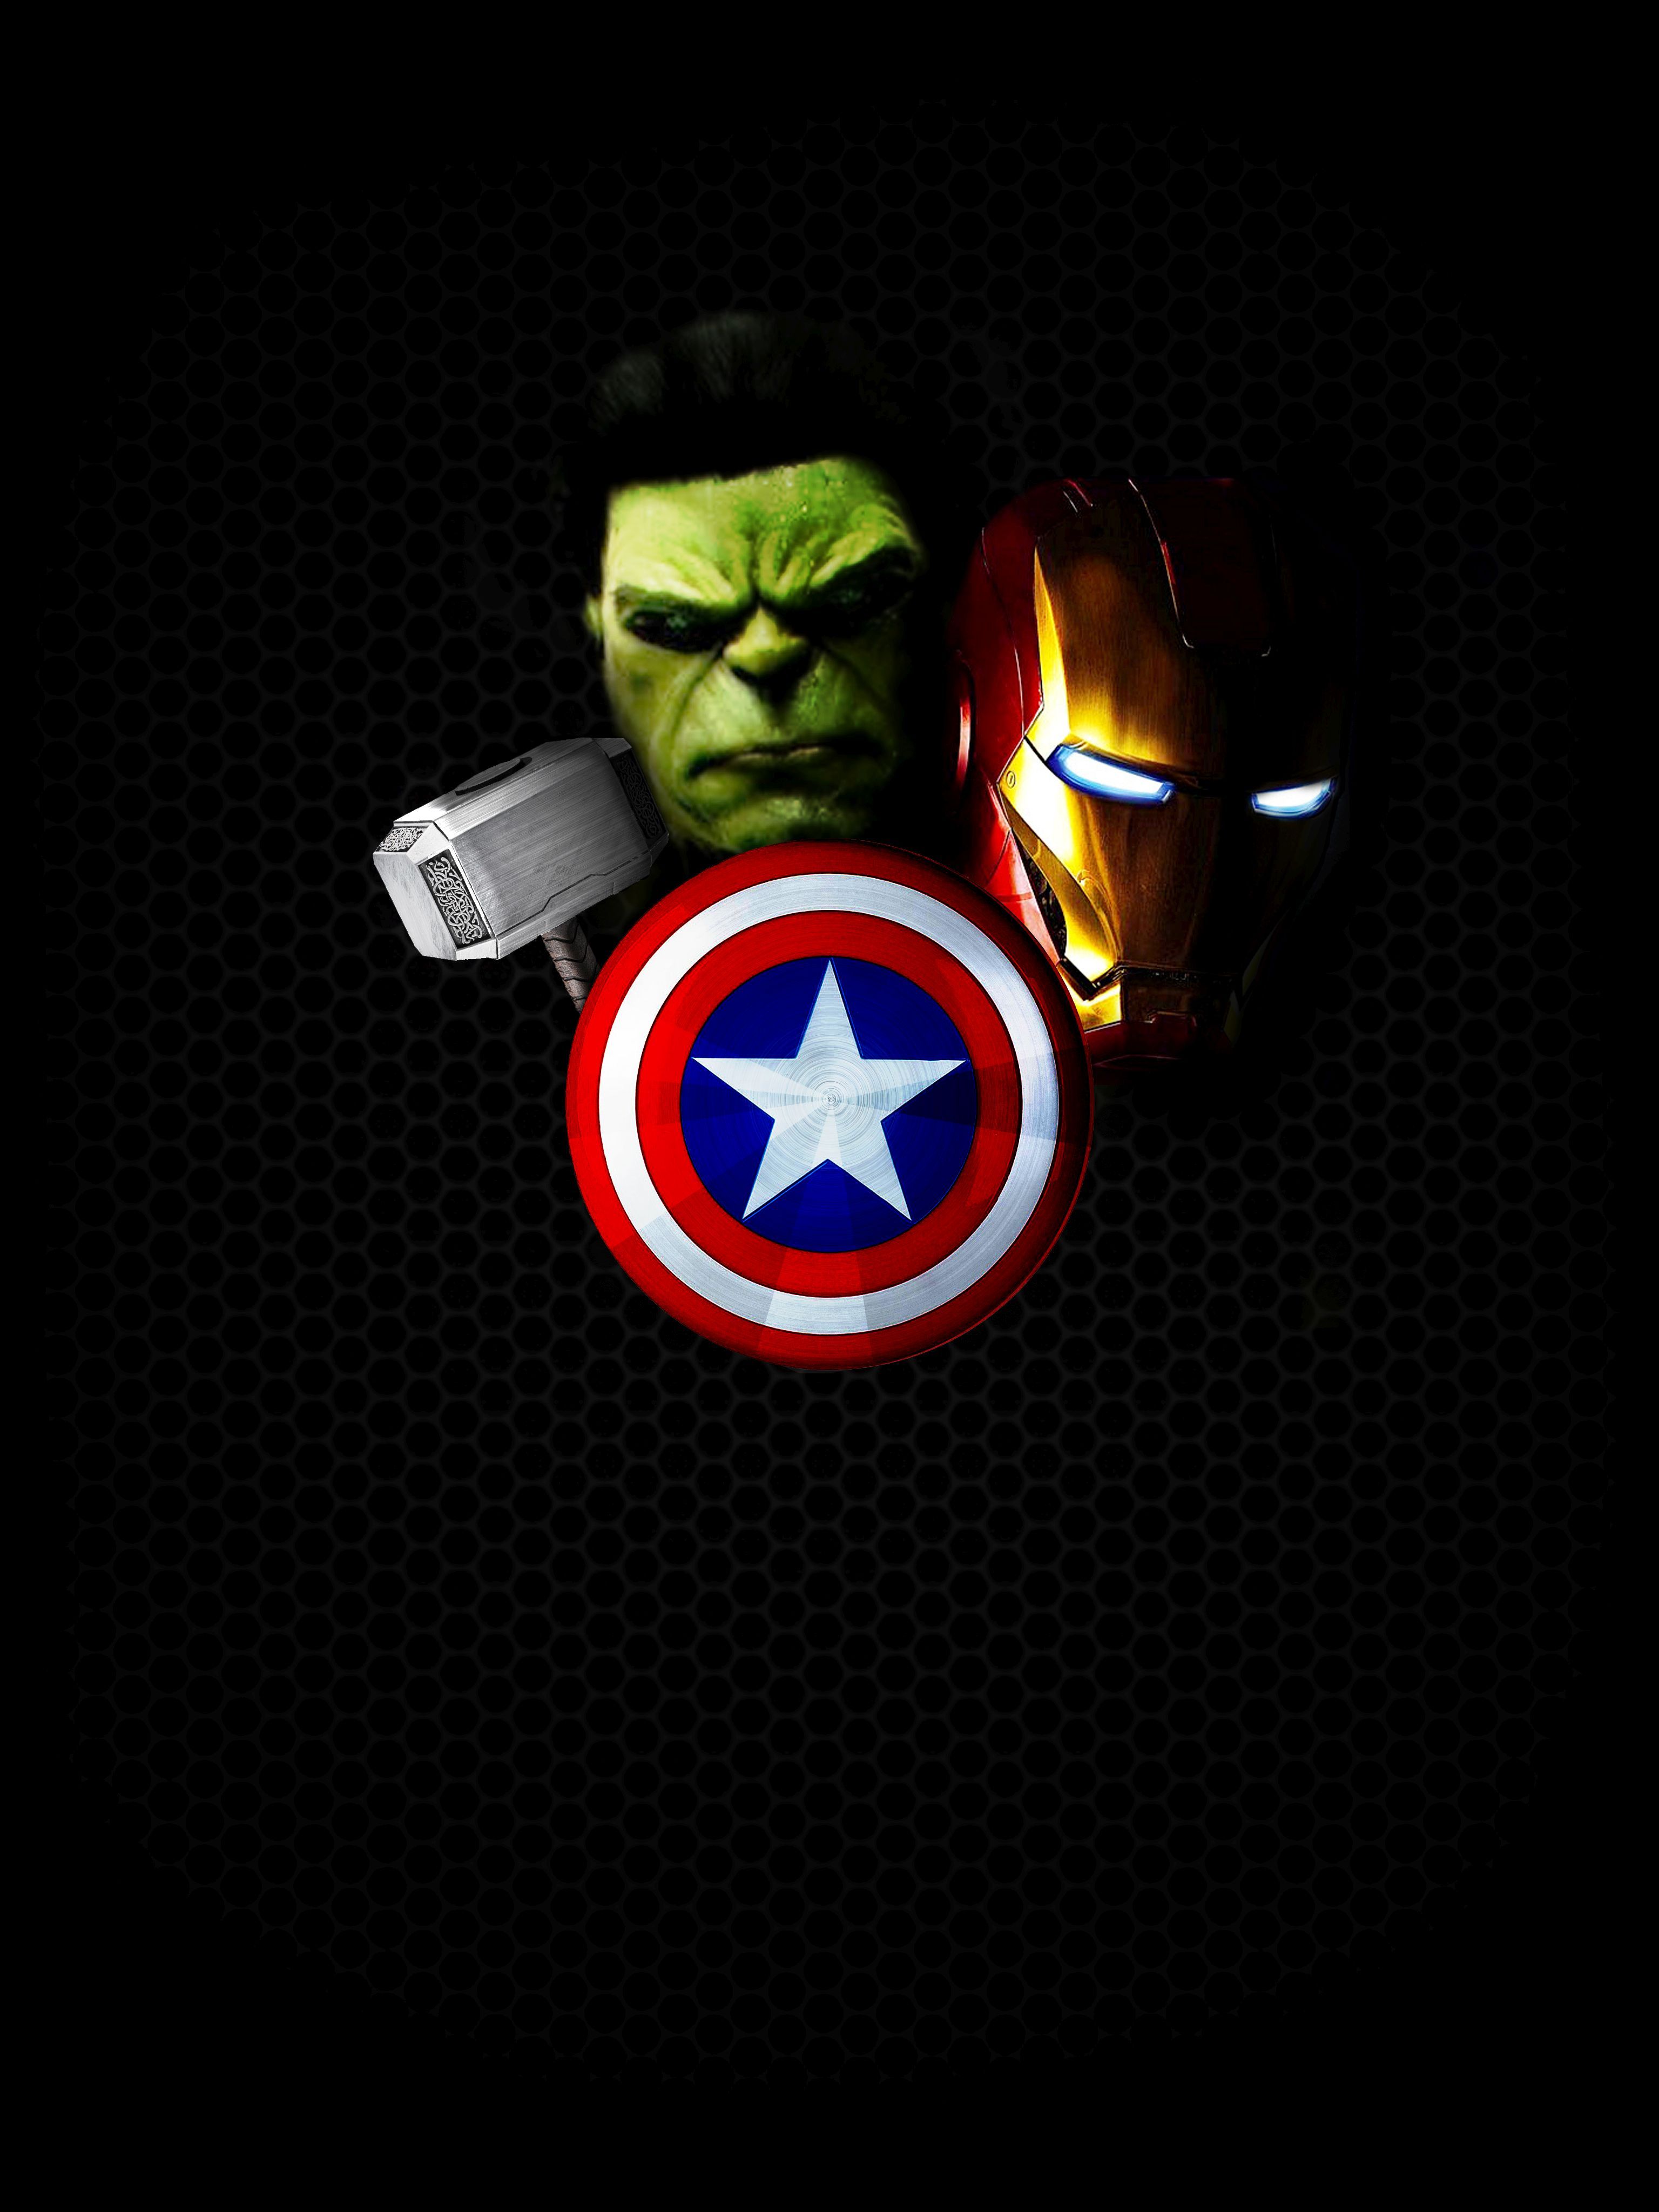 Avengers Wallpaper For Mobile Phone Tablet Desktop Puter And